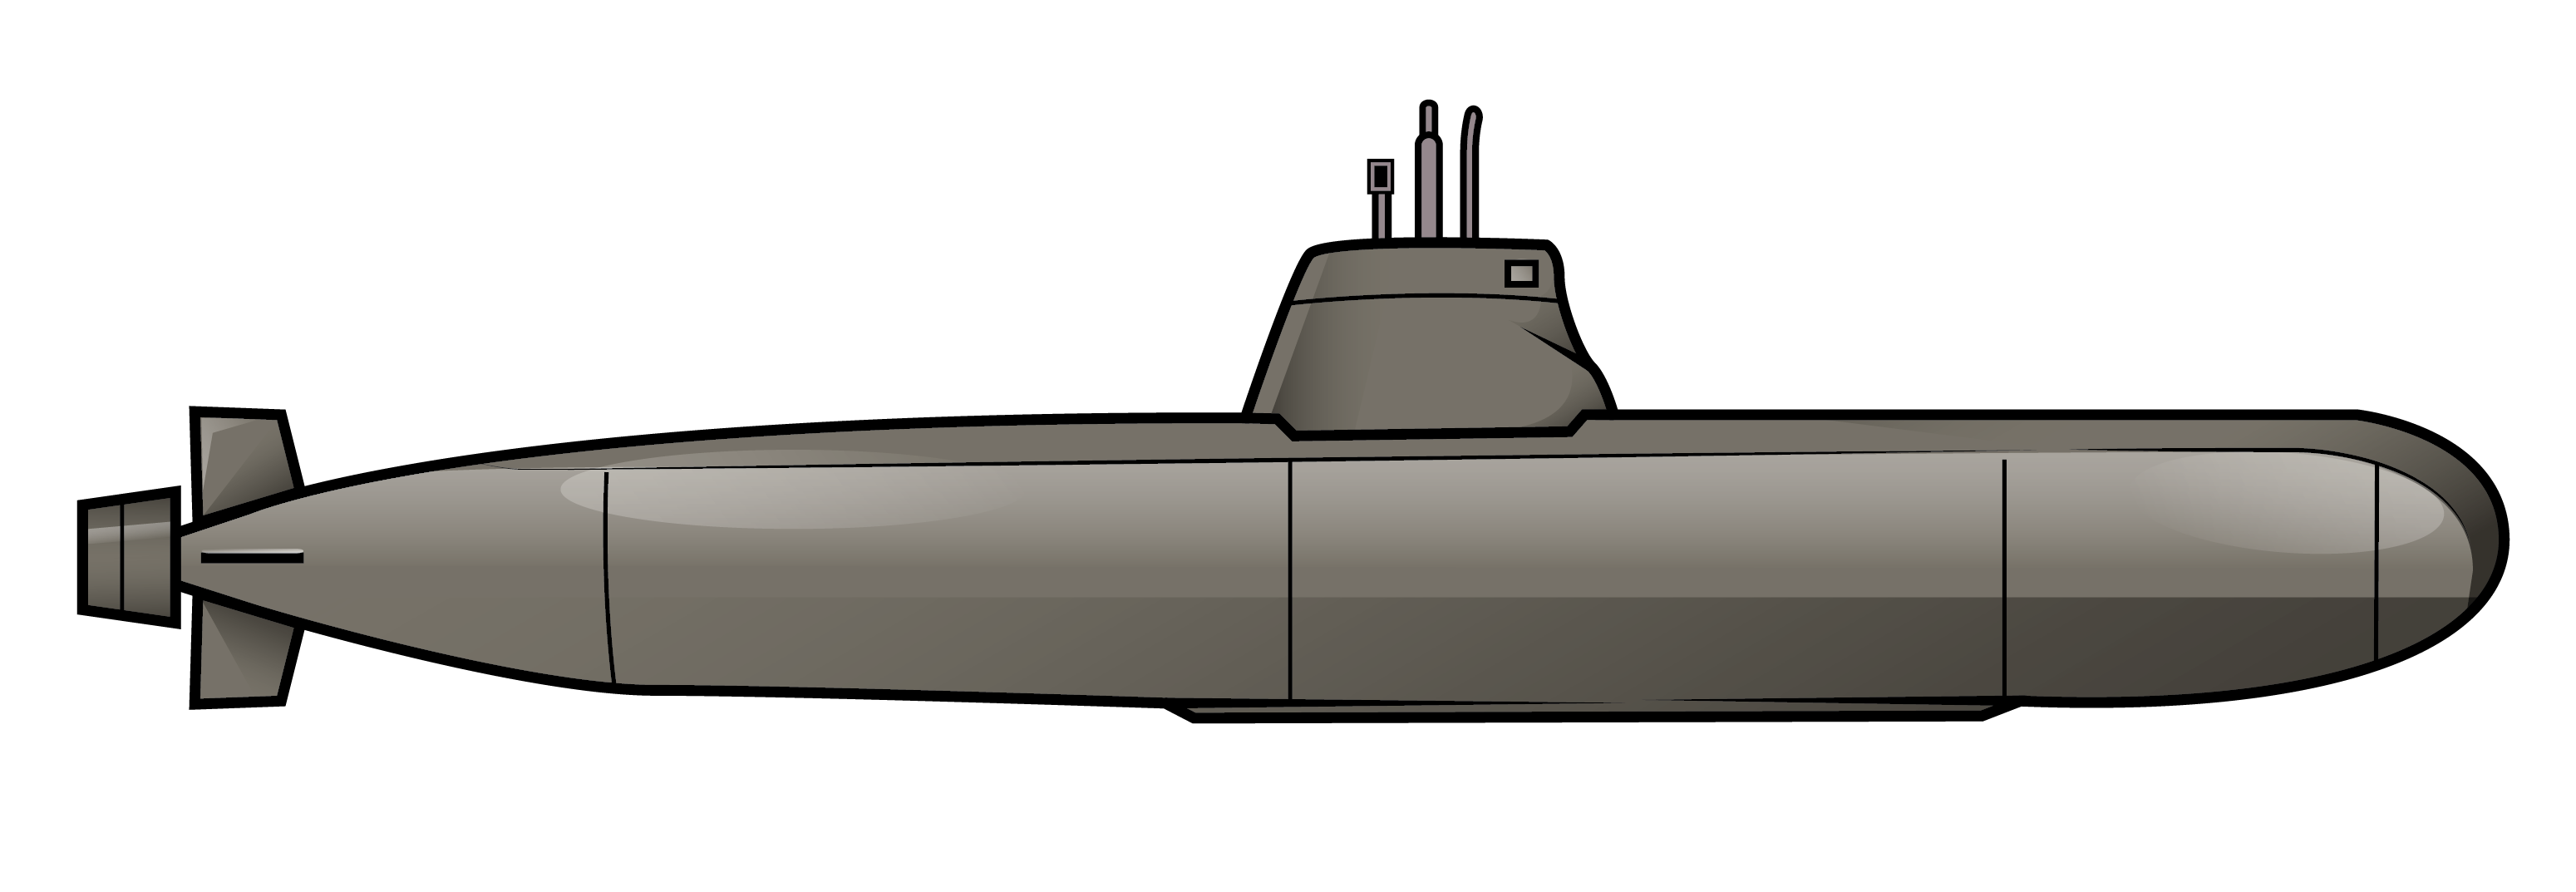 Submarine #6